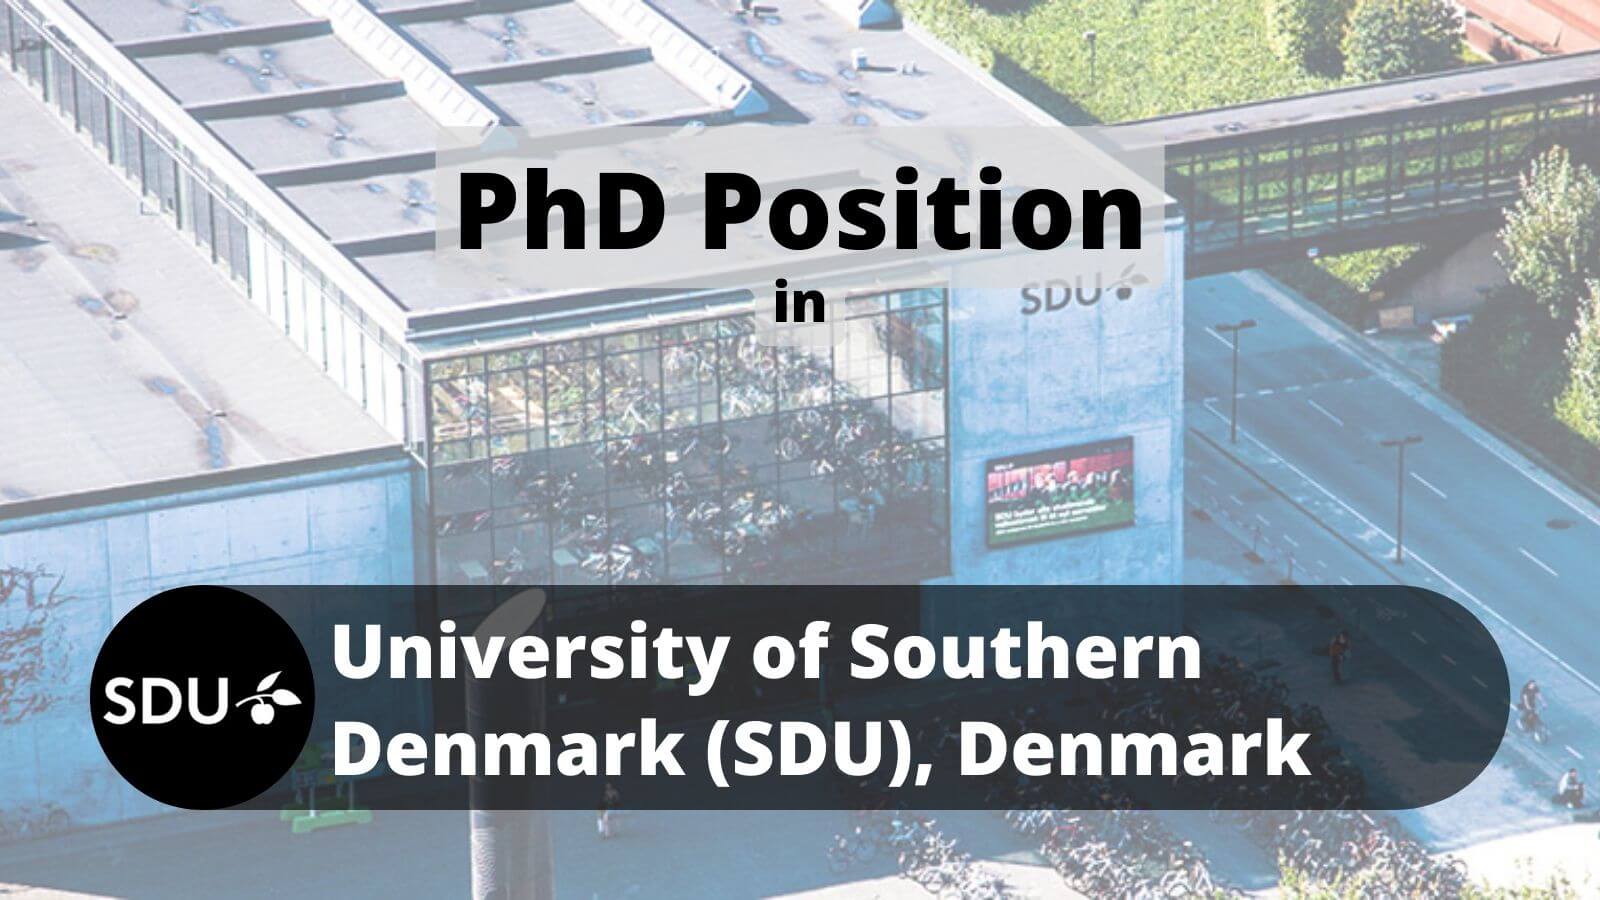 PhD Position SDU University of Southern Denmark